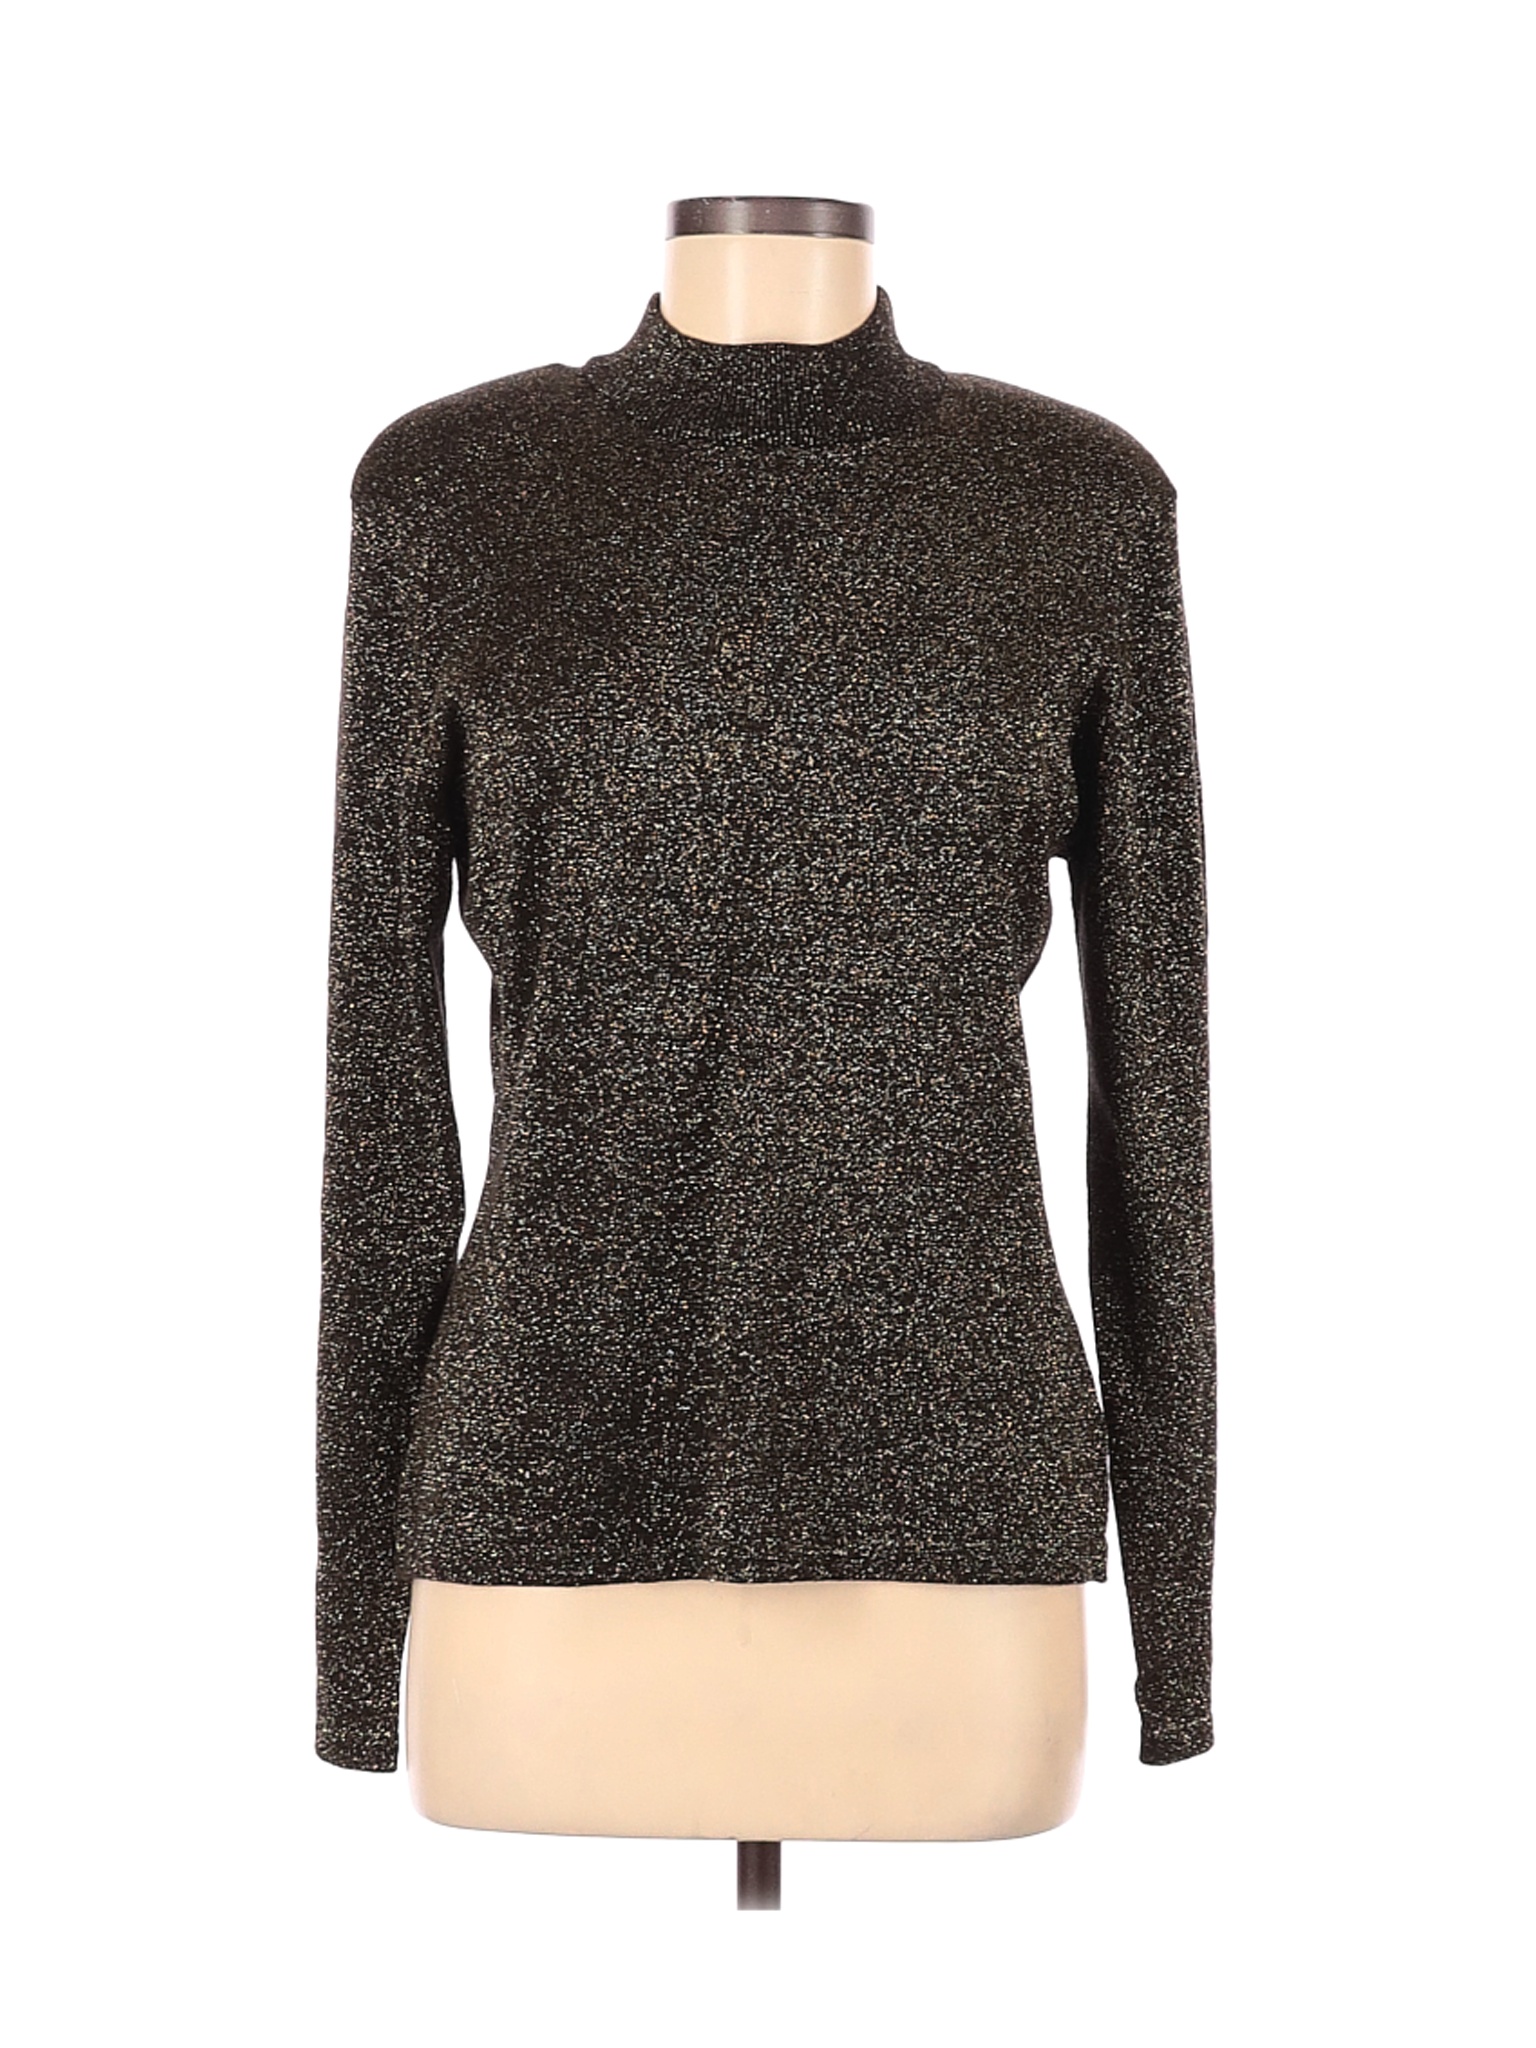 Yarnworks Women Gold Turtleneck Sweater M | eBay